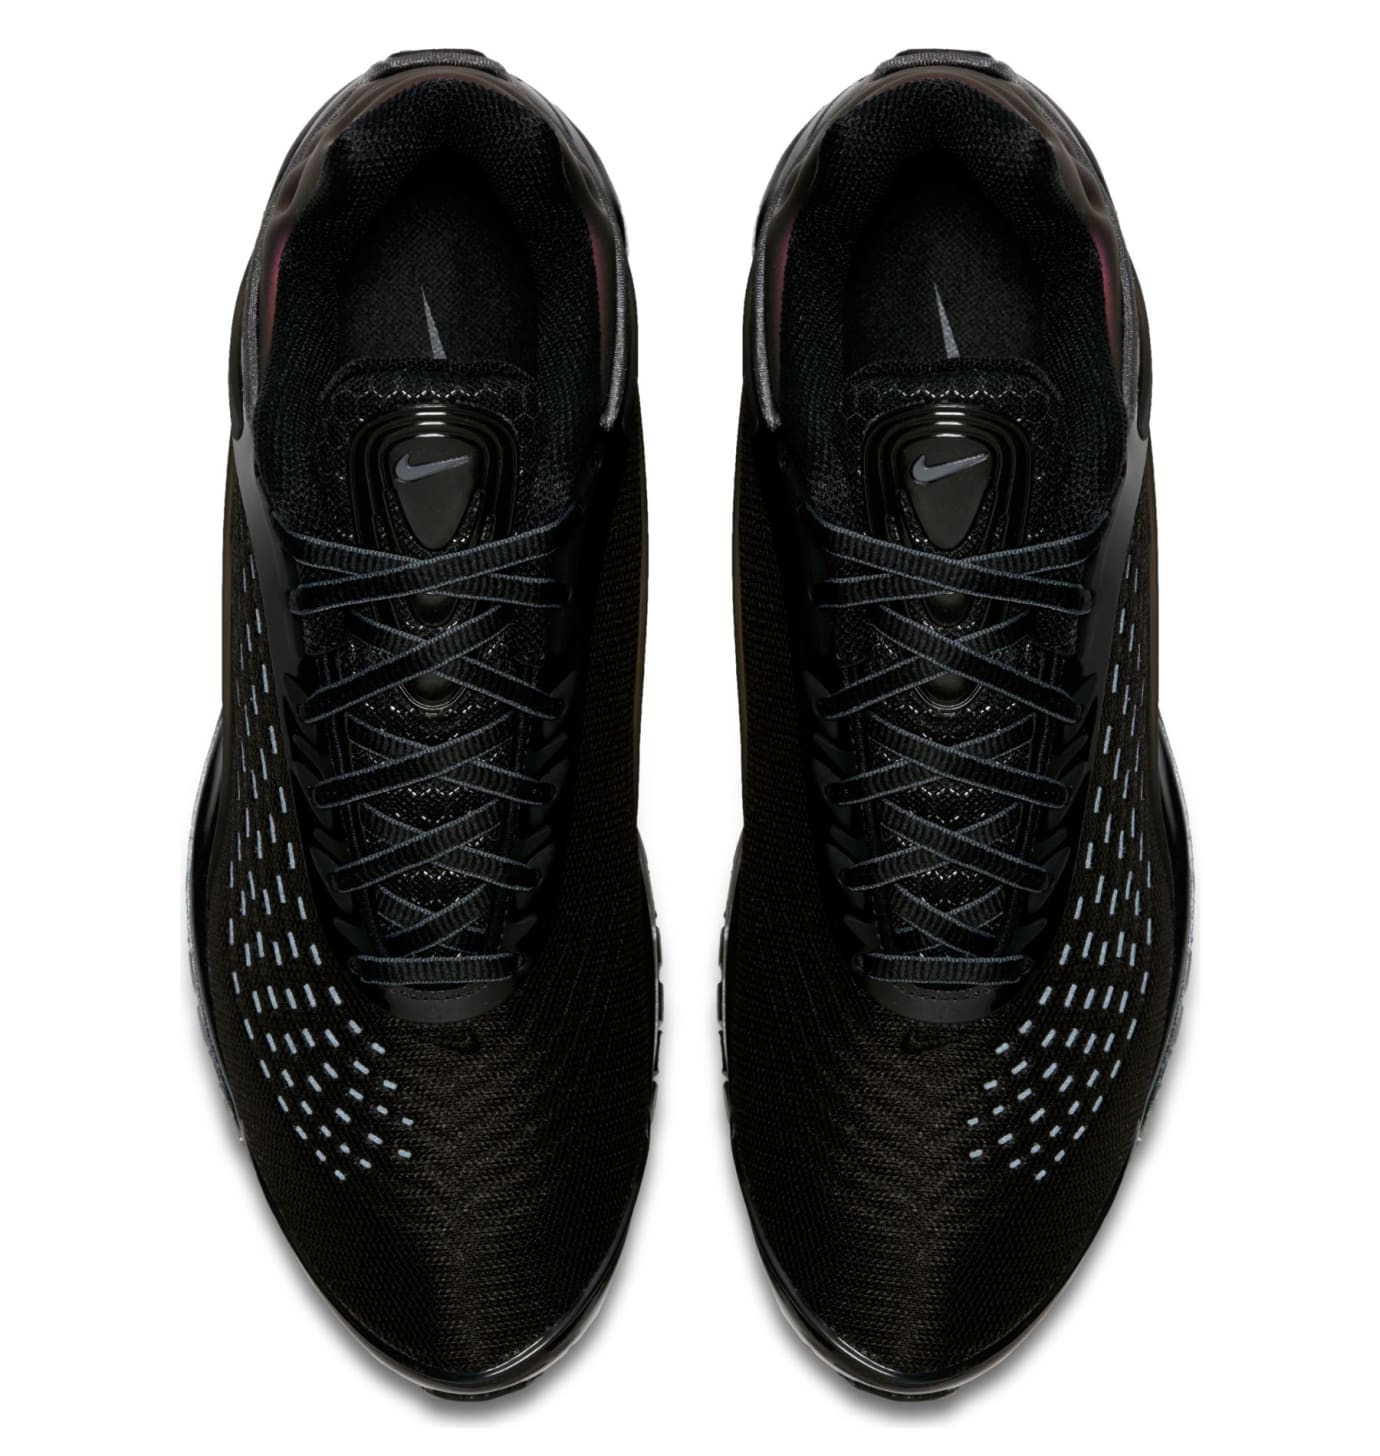 Nike Air Max Deluxe 'Black/Dark Grey' AV2589-001 Release Date | Sole ...